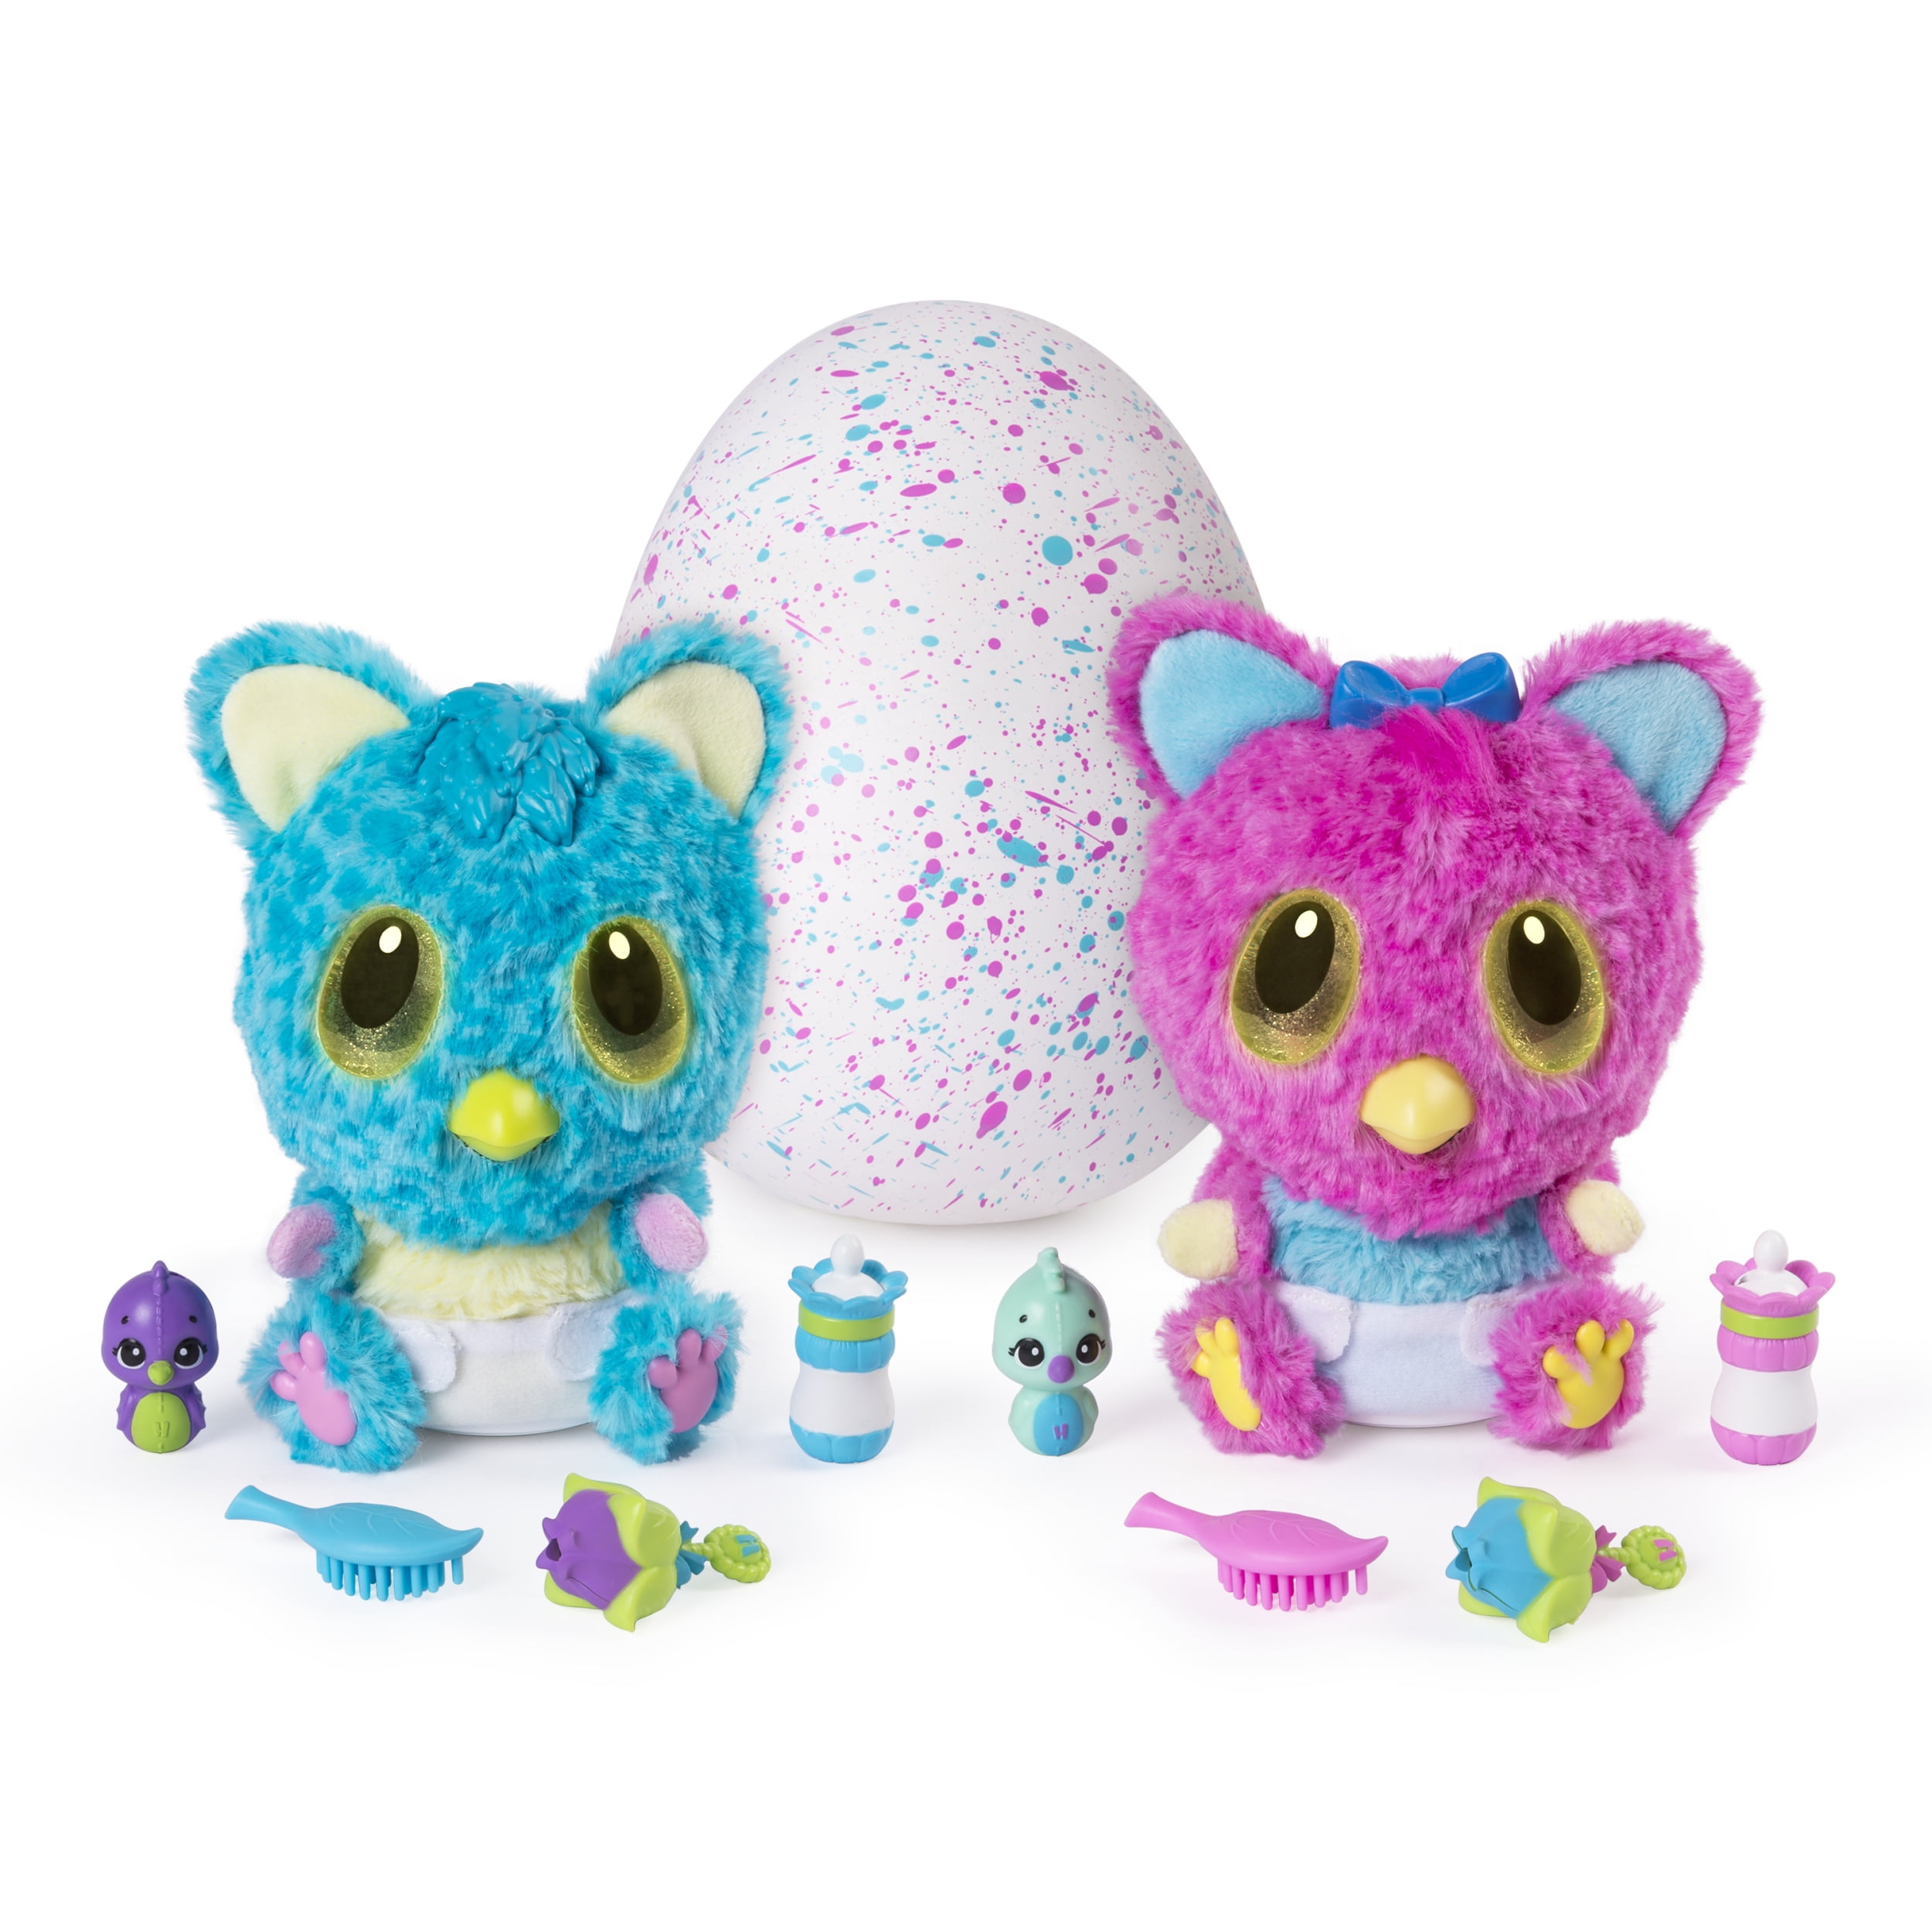 Hatchimals HatchiBabies Surprise Egg with Interactive Pet for sale online 6046467 